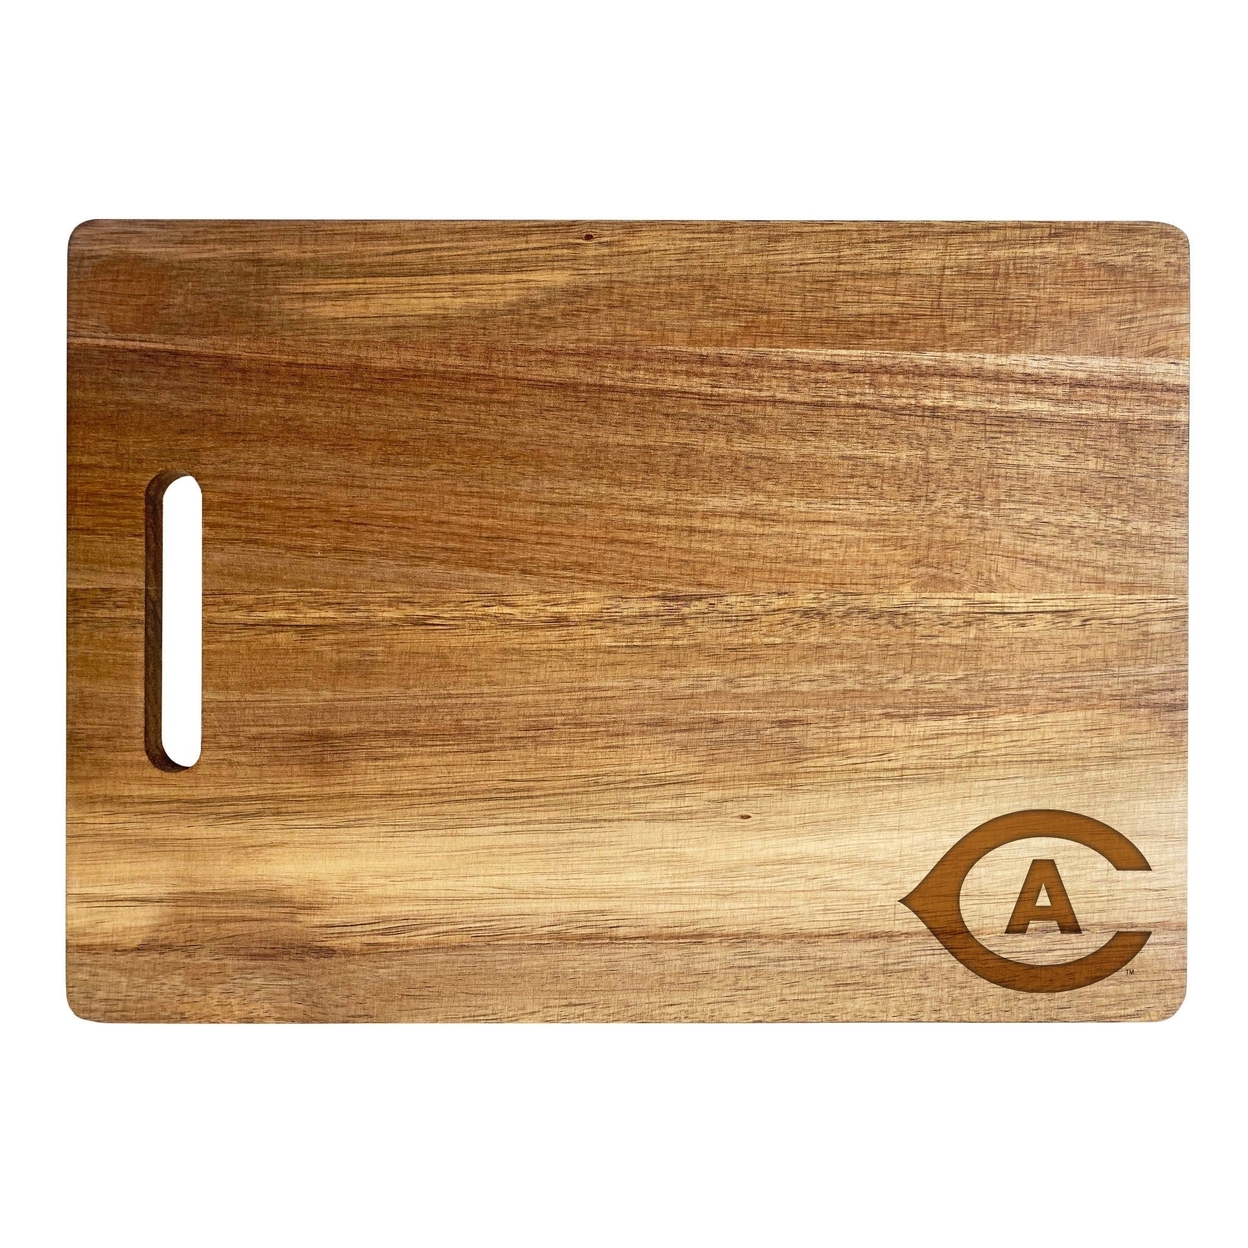 UC Davis Aggies Engraved Wooden Cutting Board 10 X 14 Acacia Wood - Small Engraving